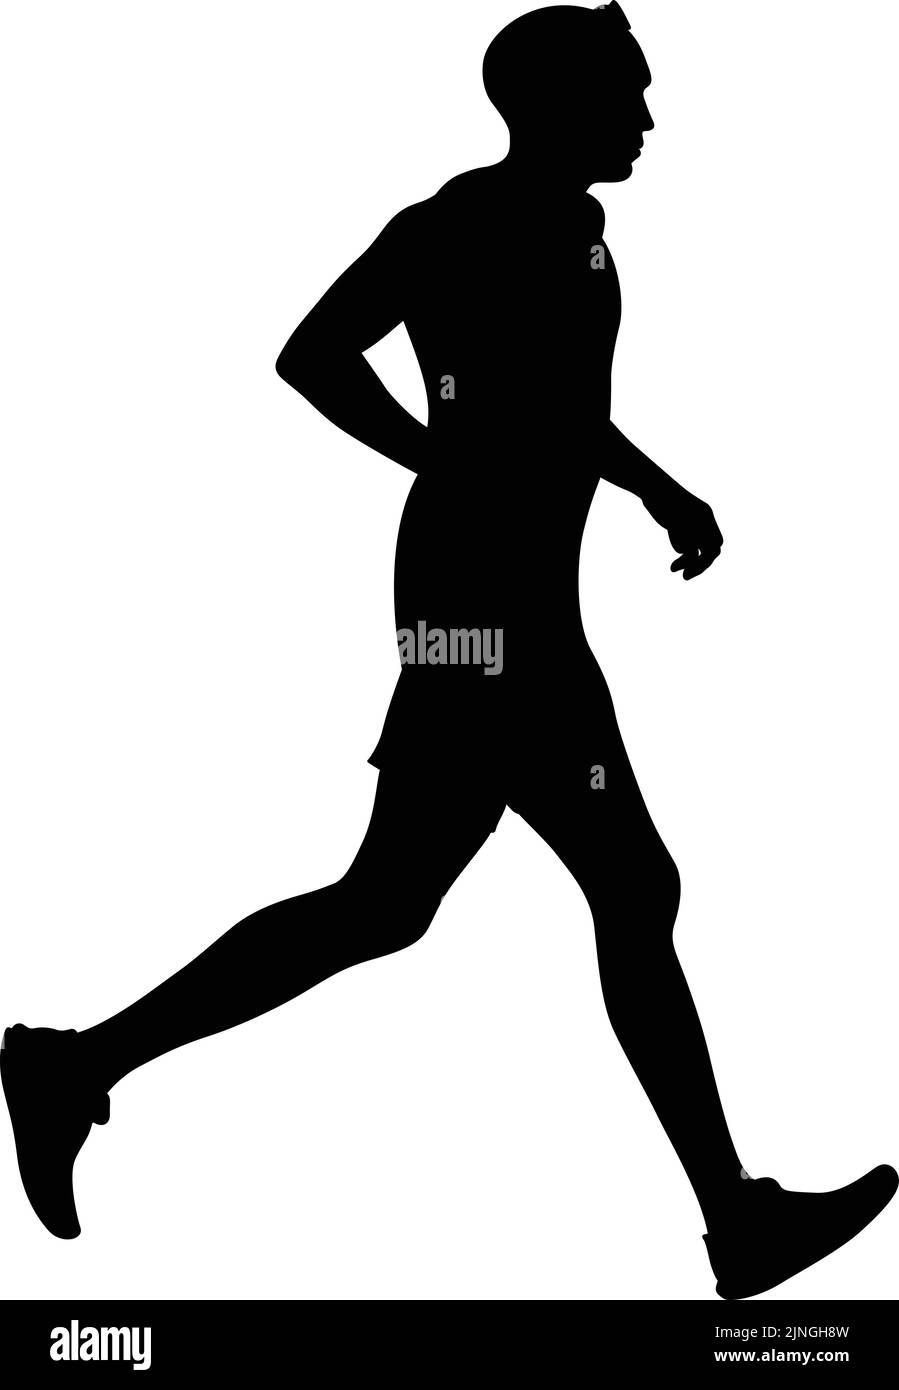 silueta negra de running atleta de running Ilustración del Vector